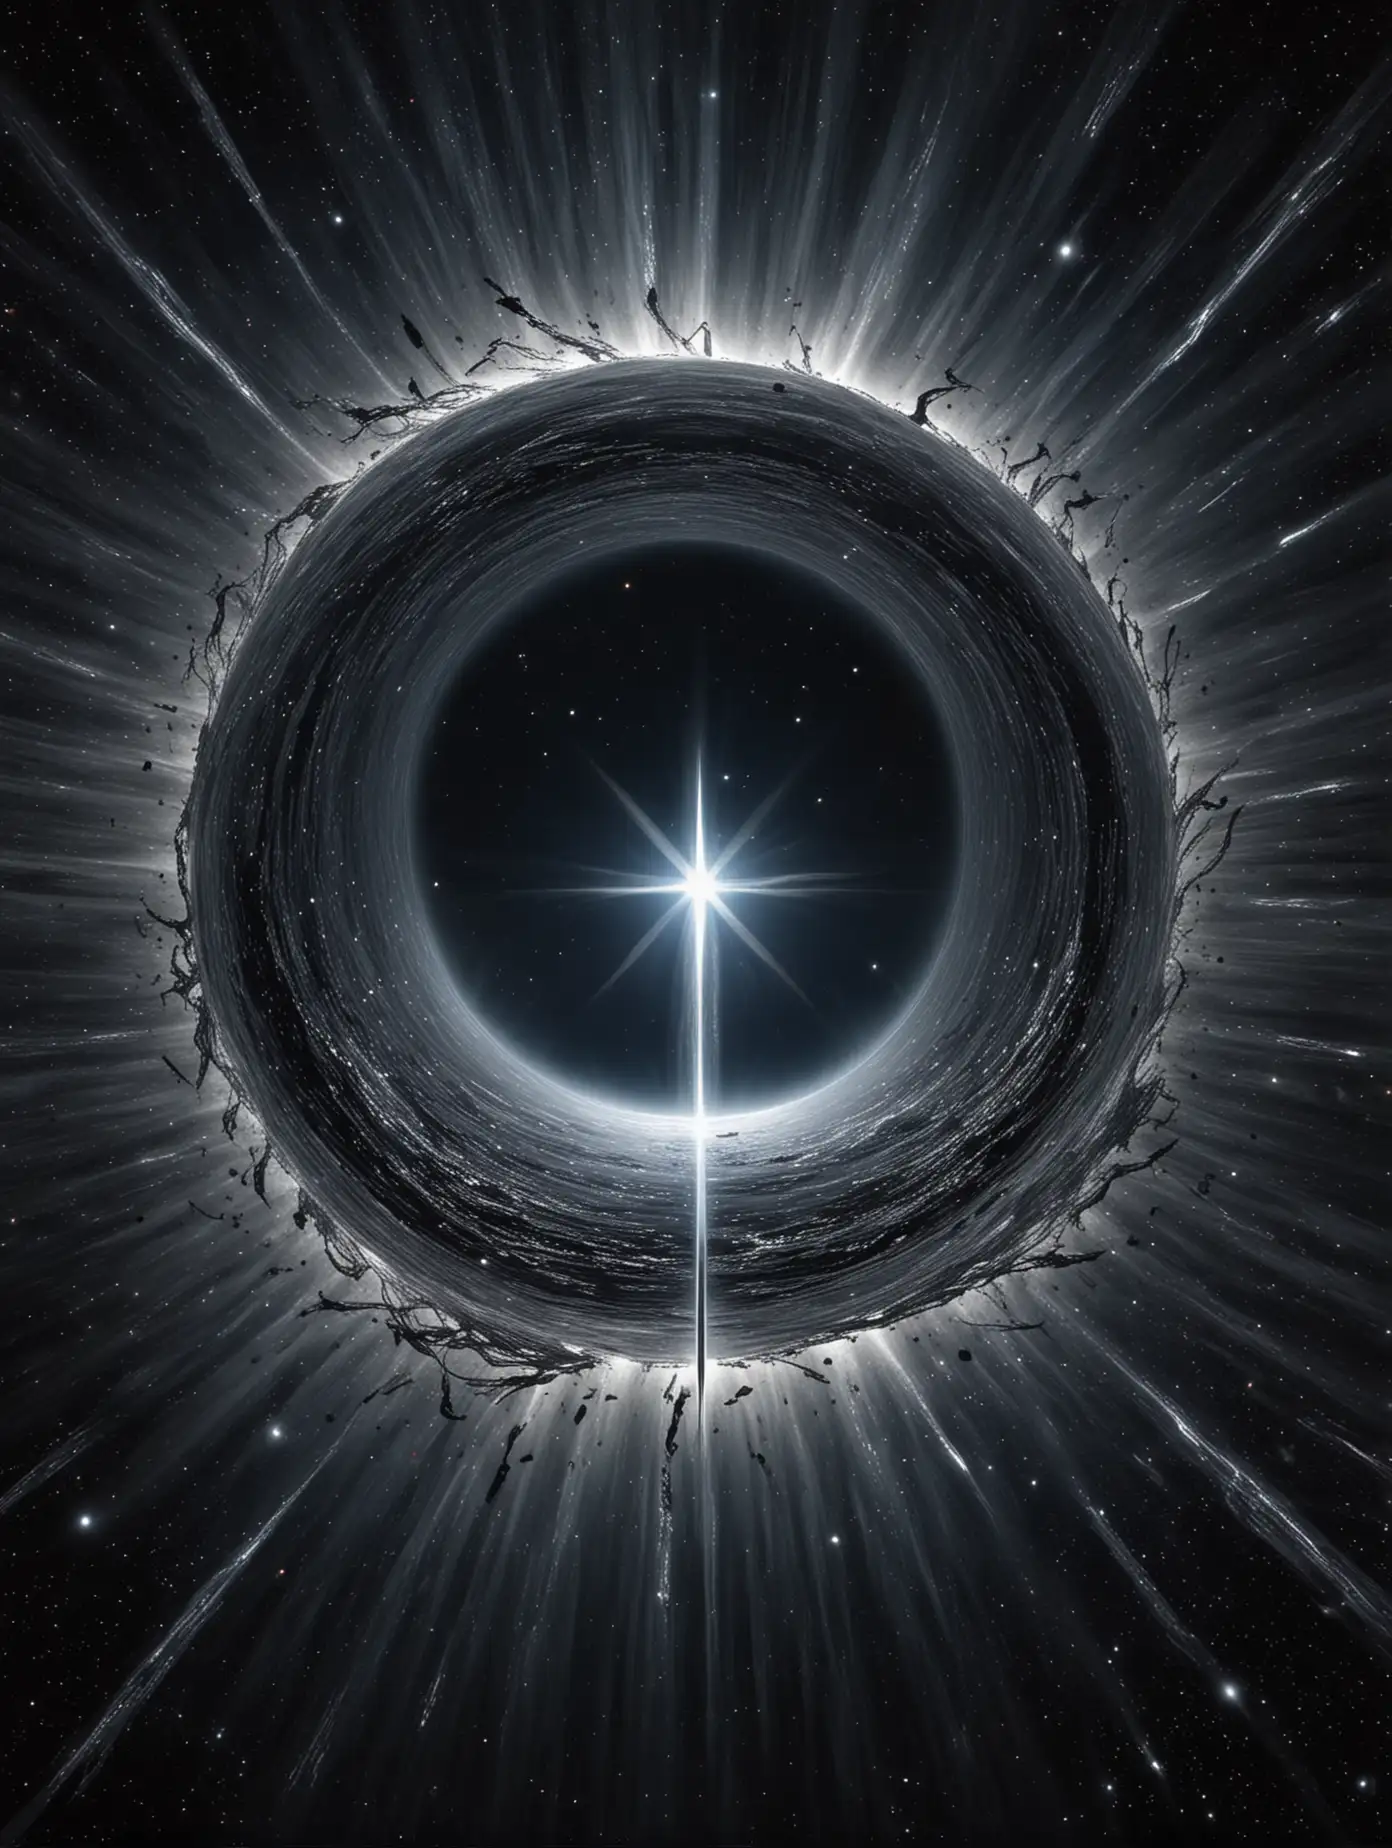 Black hole, event horizon, cosmos, silver sword